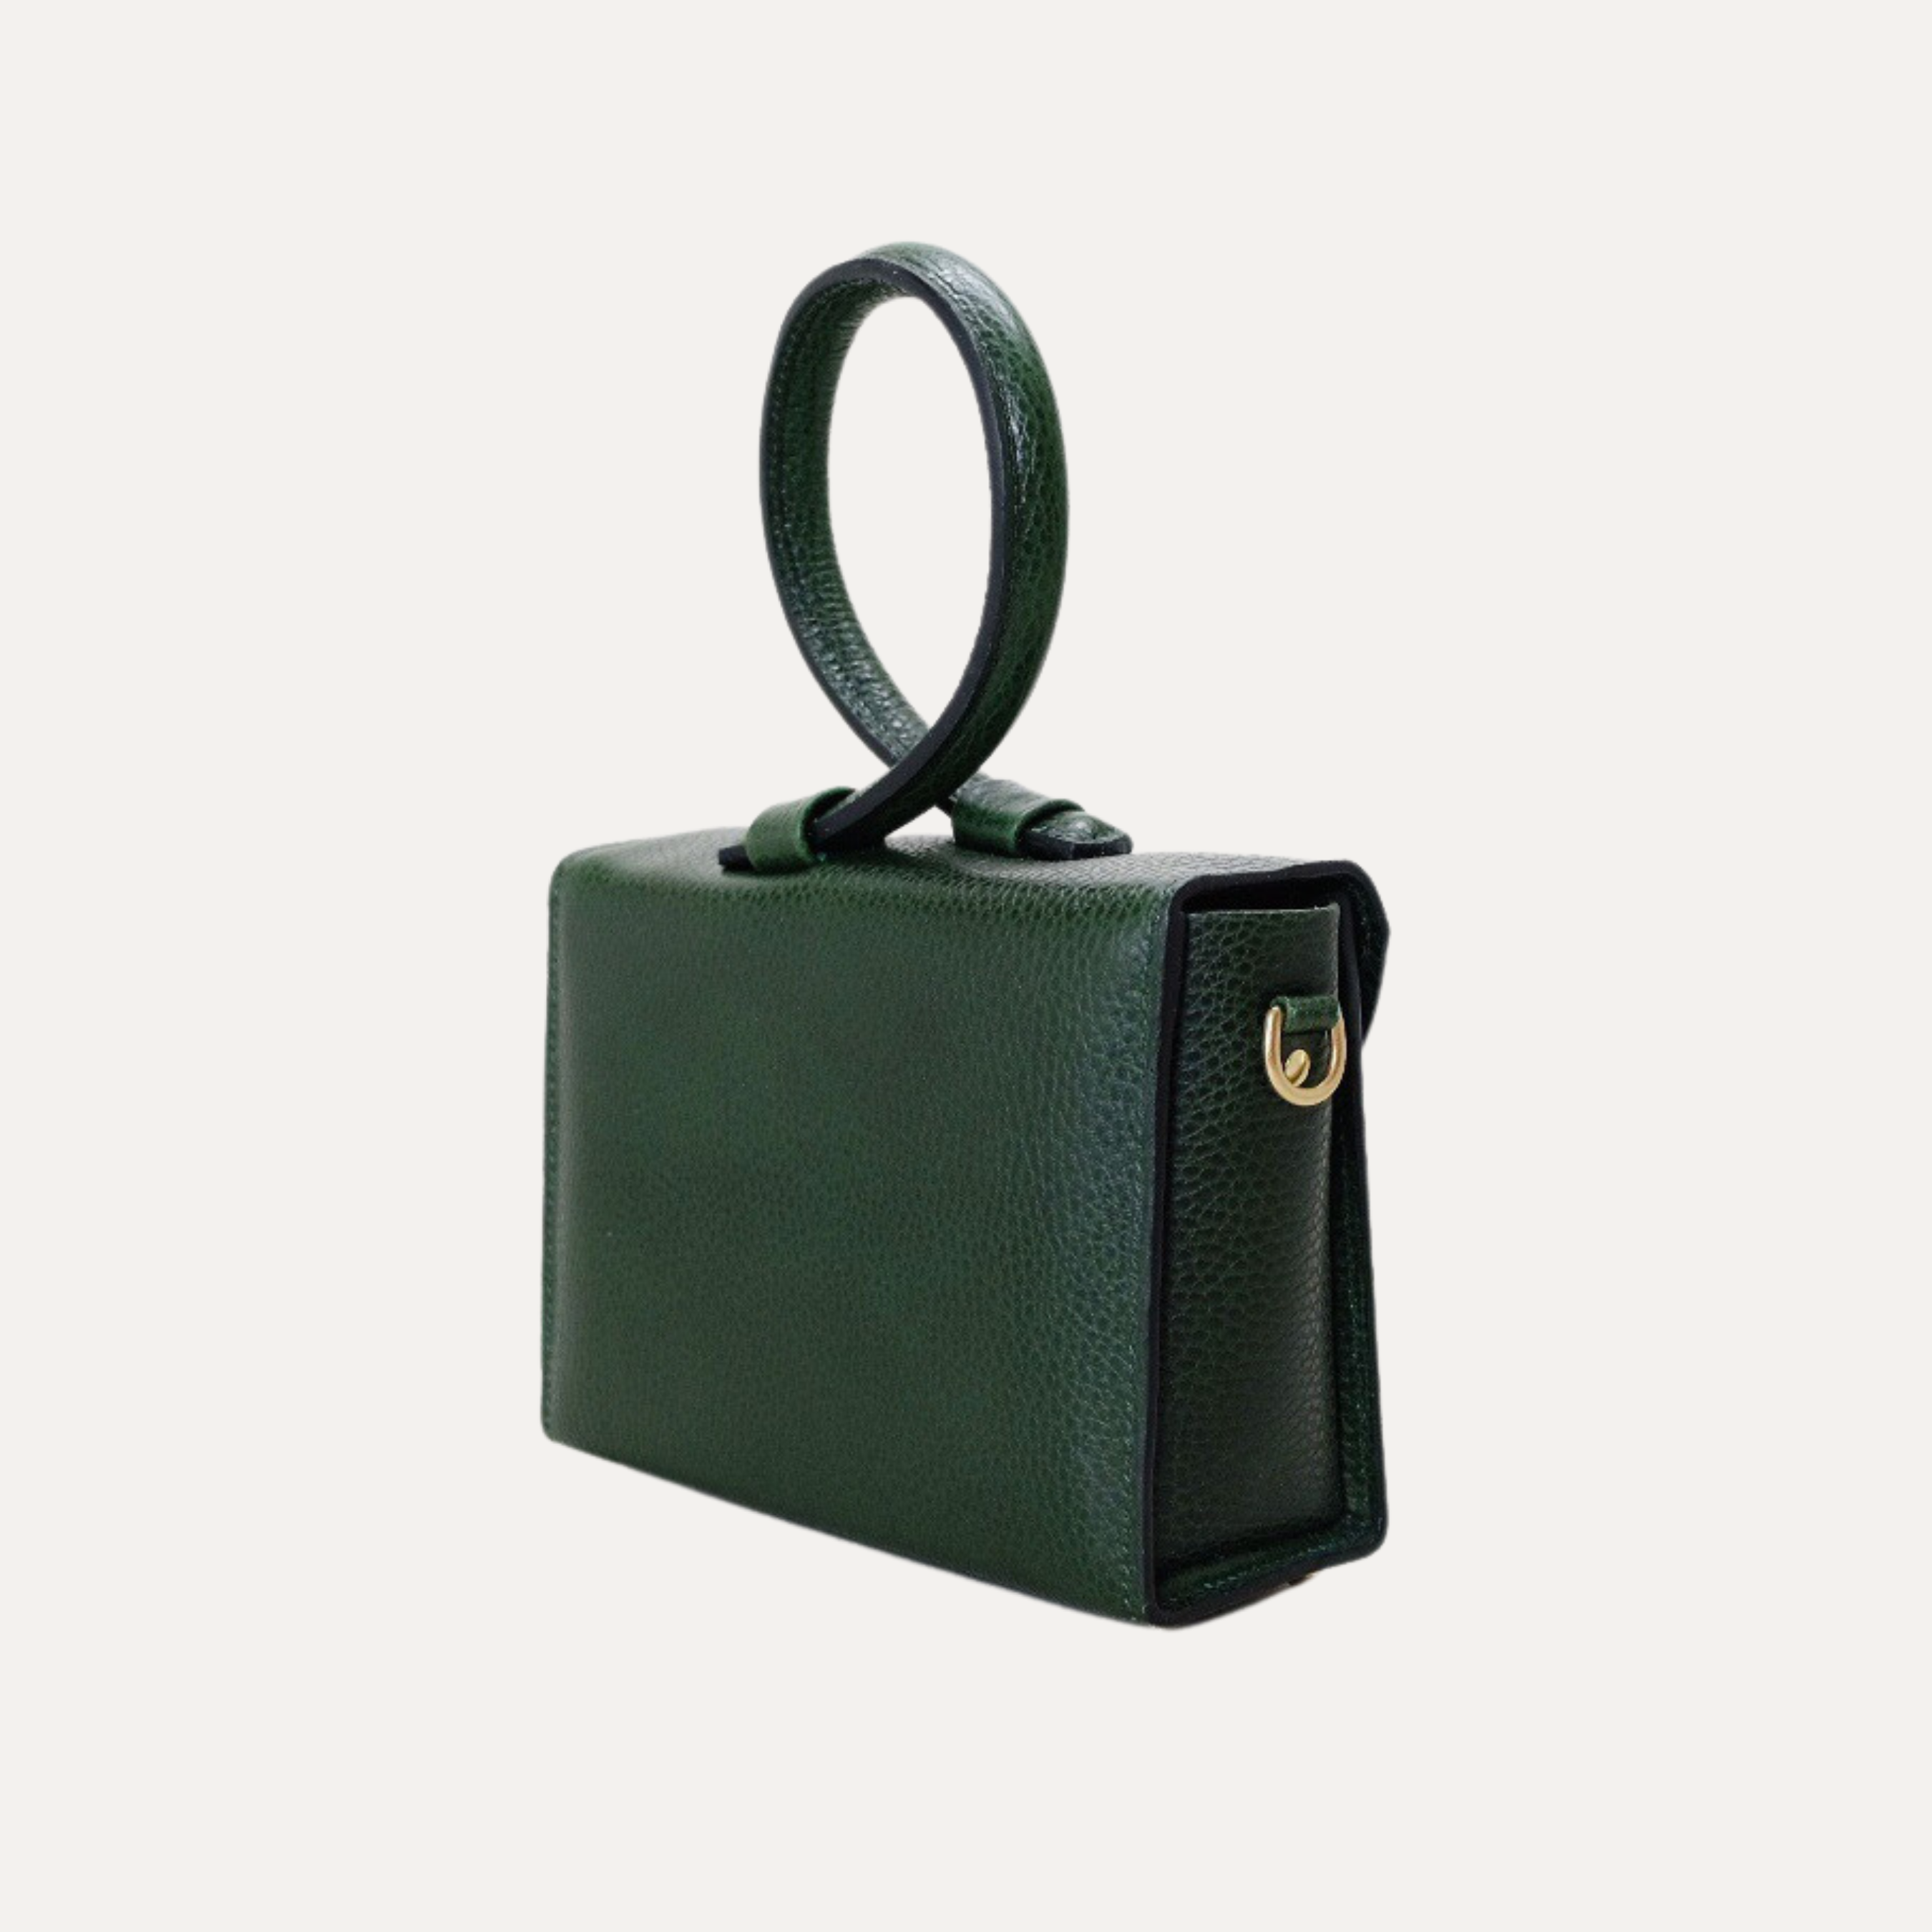 Pebbled Green Italian Leather Loop Handle Handbag Made in Australia